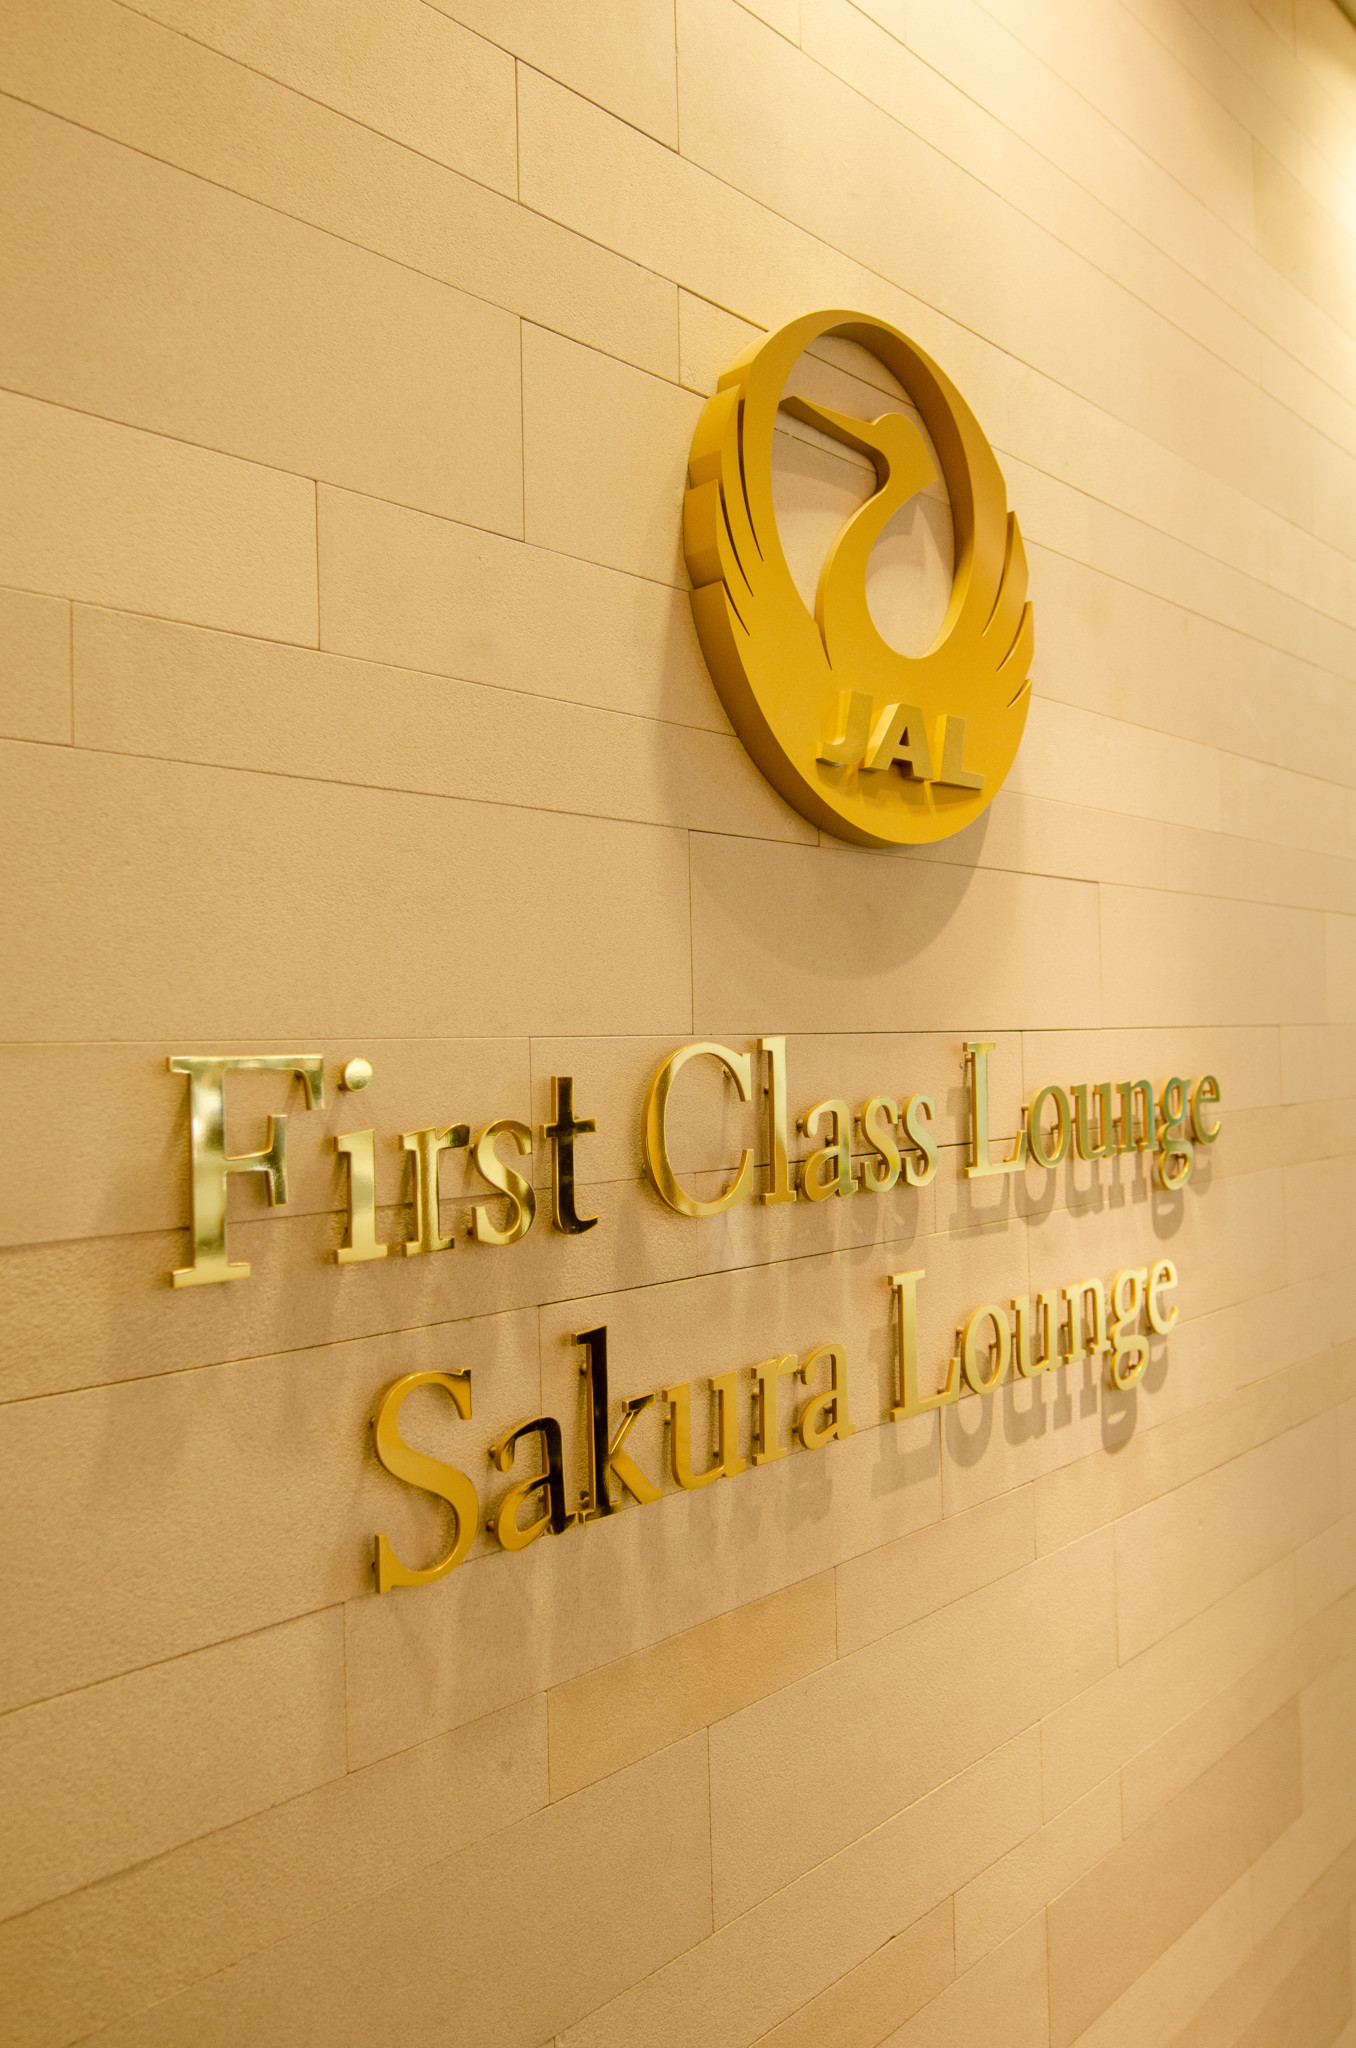 First Class Sakura Lounge Tokio-Narita